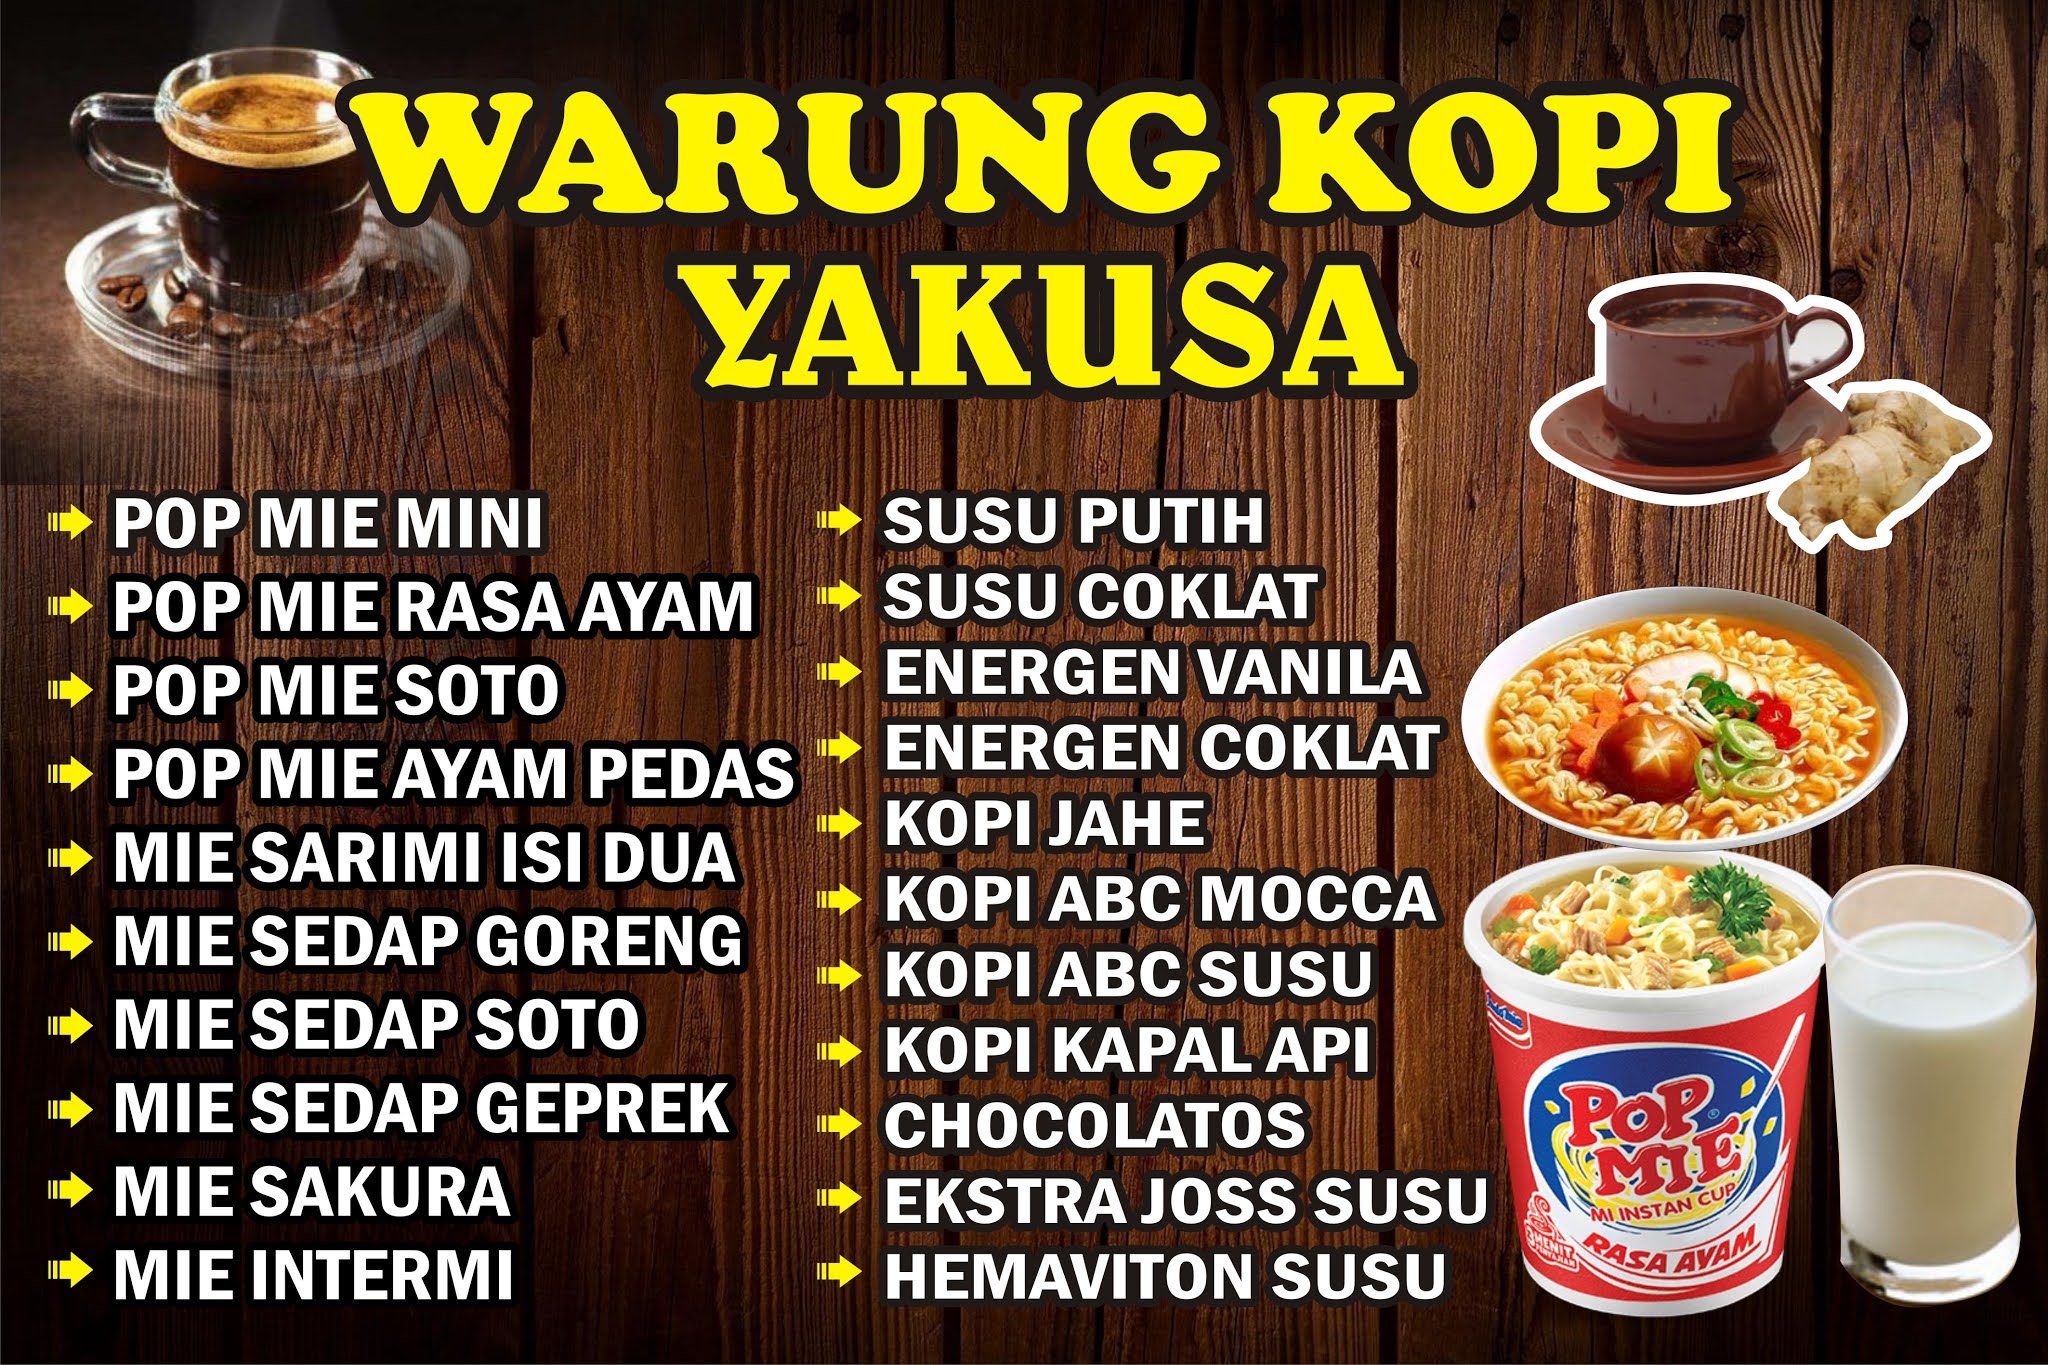 Warung Kopi kang ji - Coffee Shop Recommend!